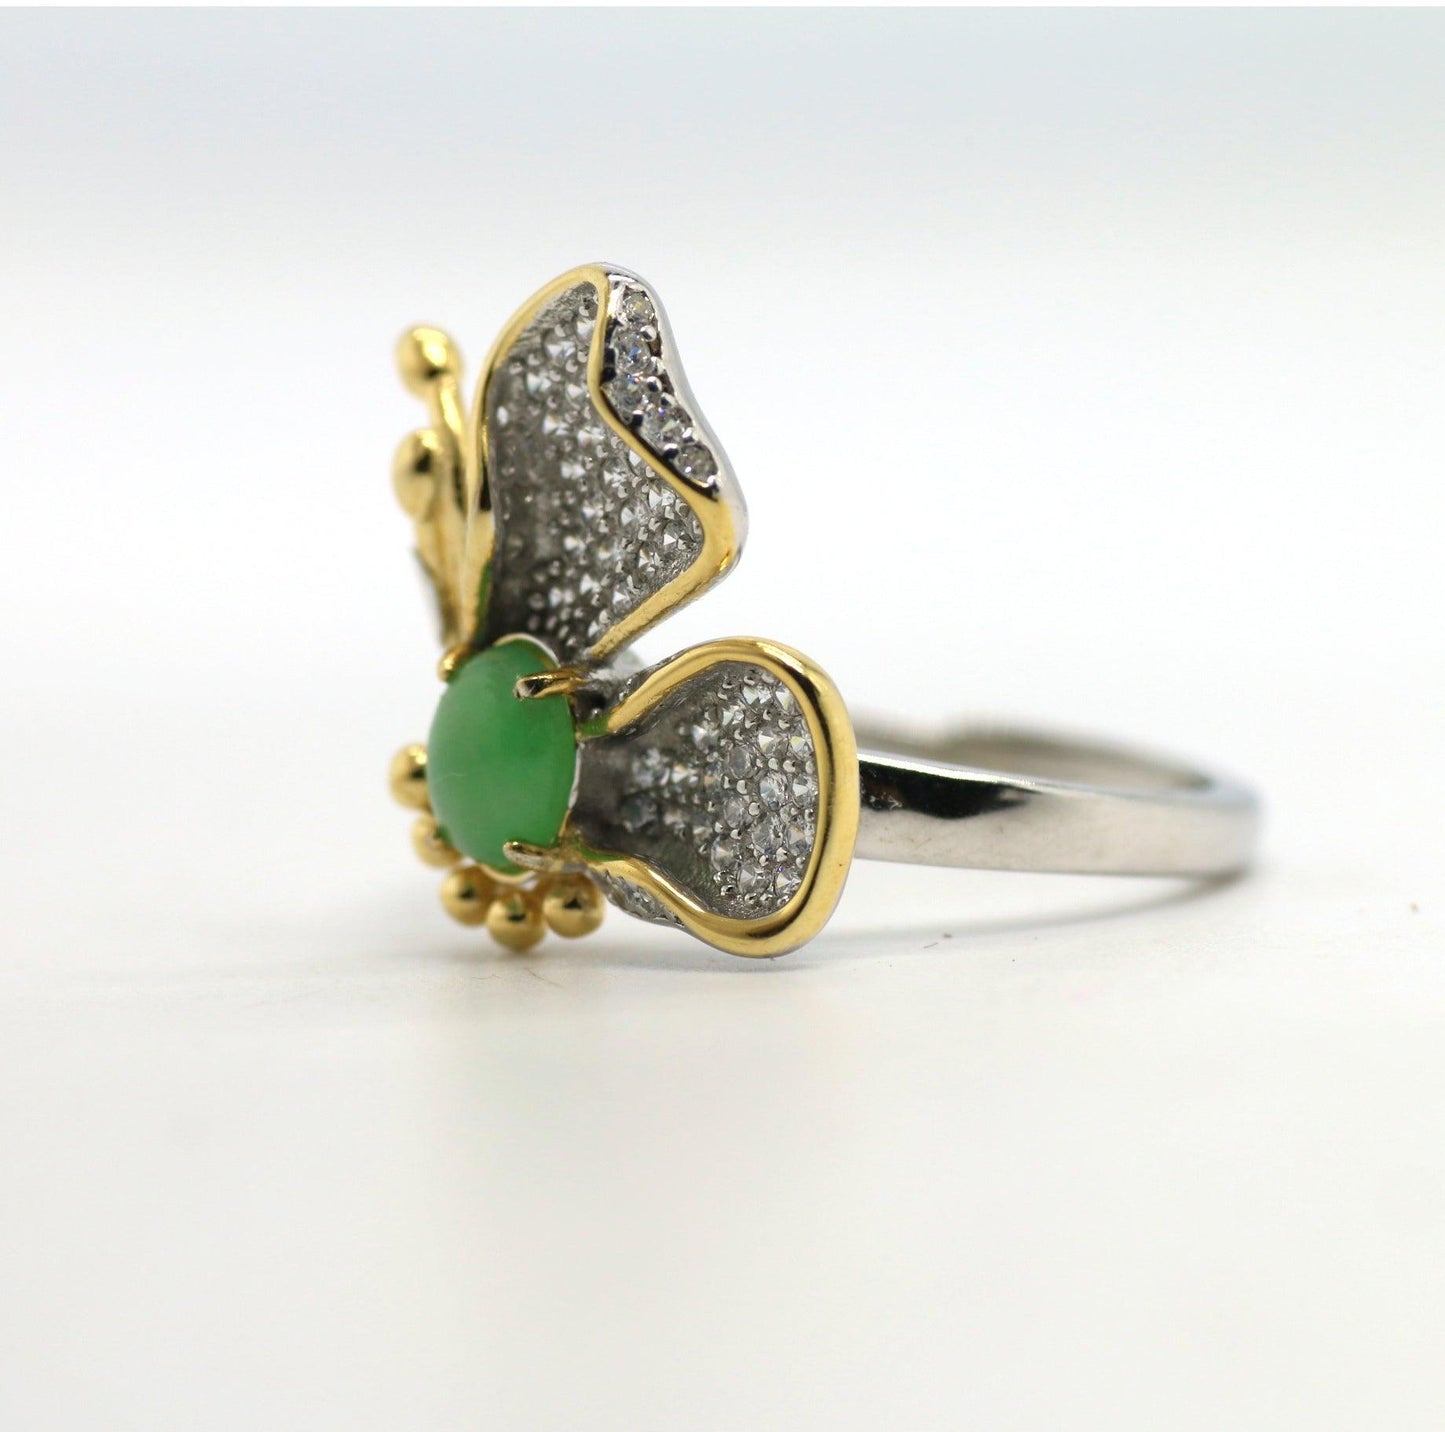 Type A Jadeite Jade Inlay Ring Series - Jade-collector.com